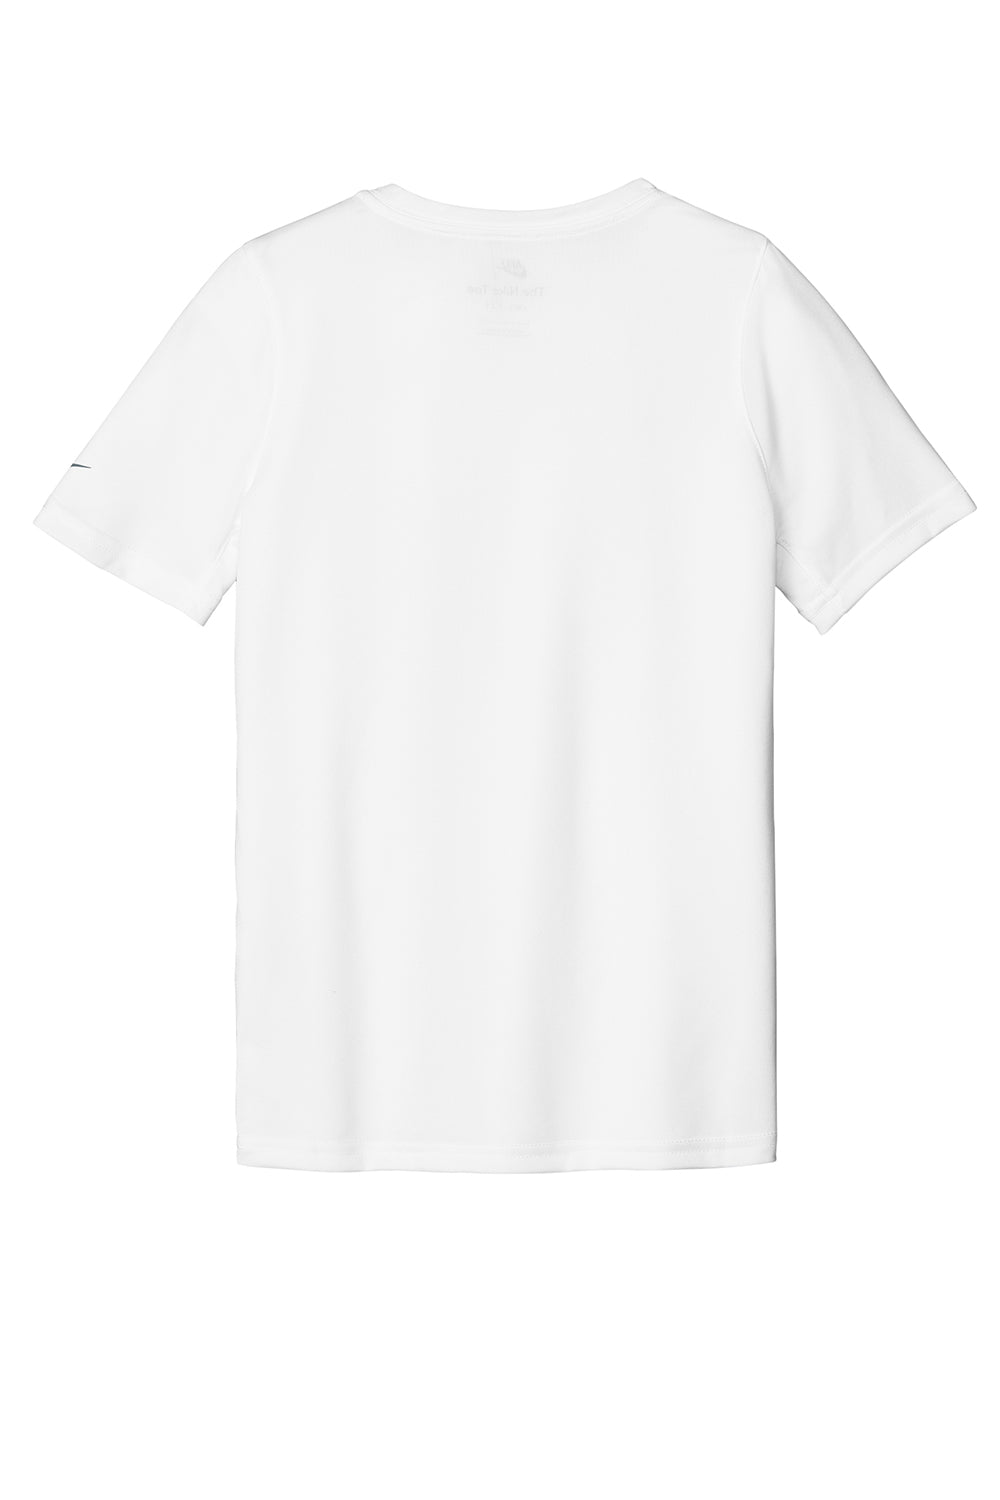 Nike NKDX8787 Youth rLegend Dri-Fit Moisture Wicking Short Sleeve Crewneck T-Shirt White Flat Back